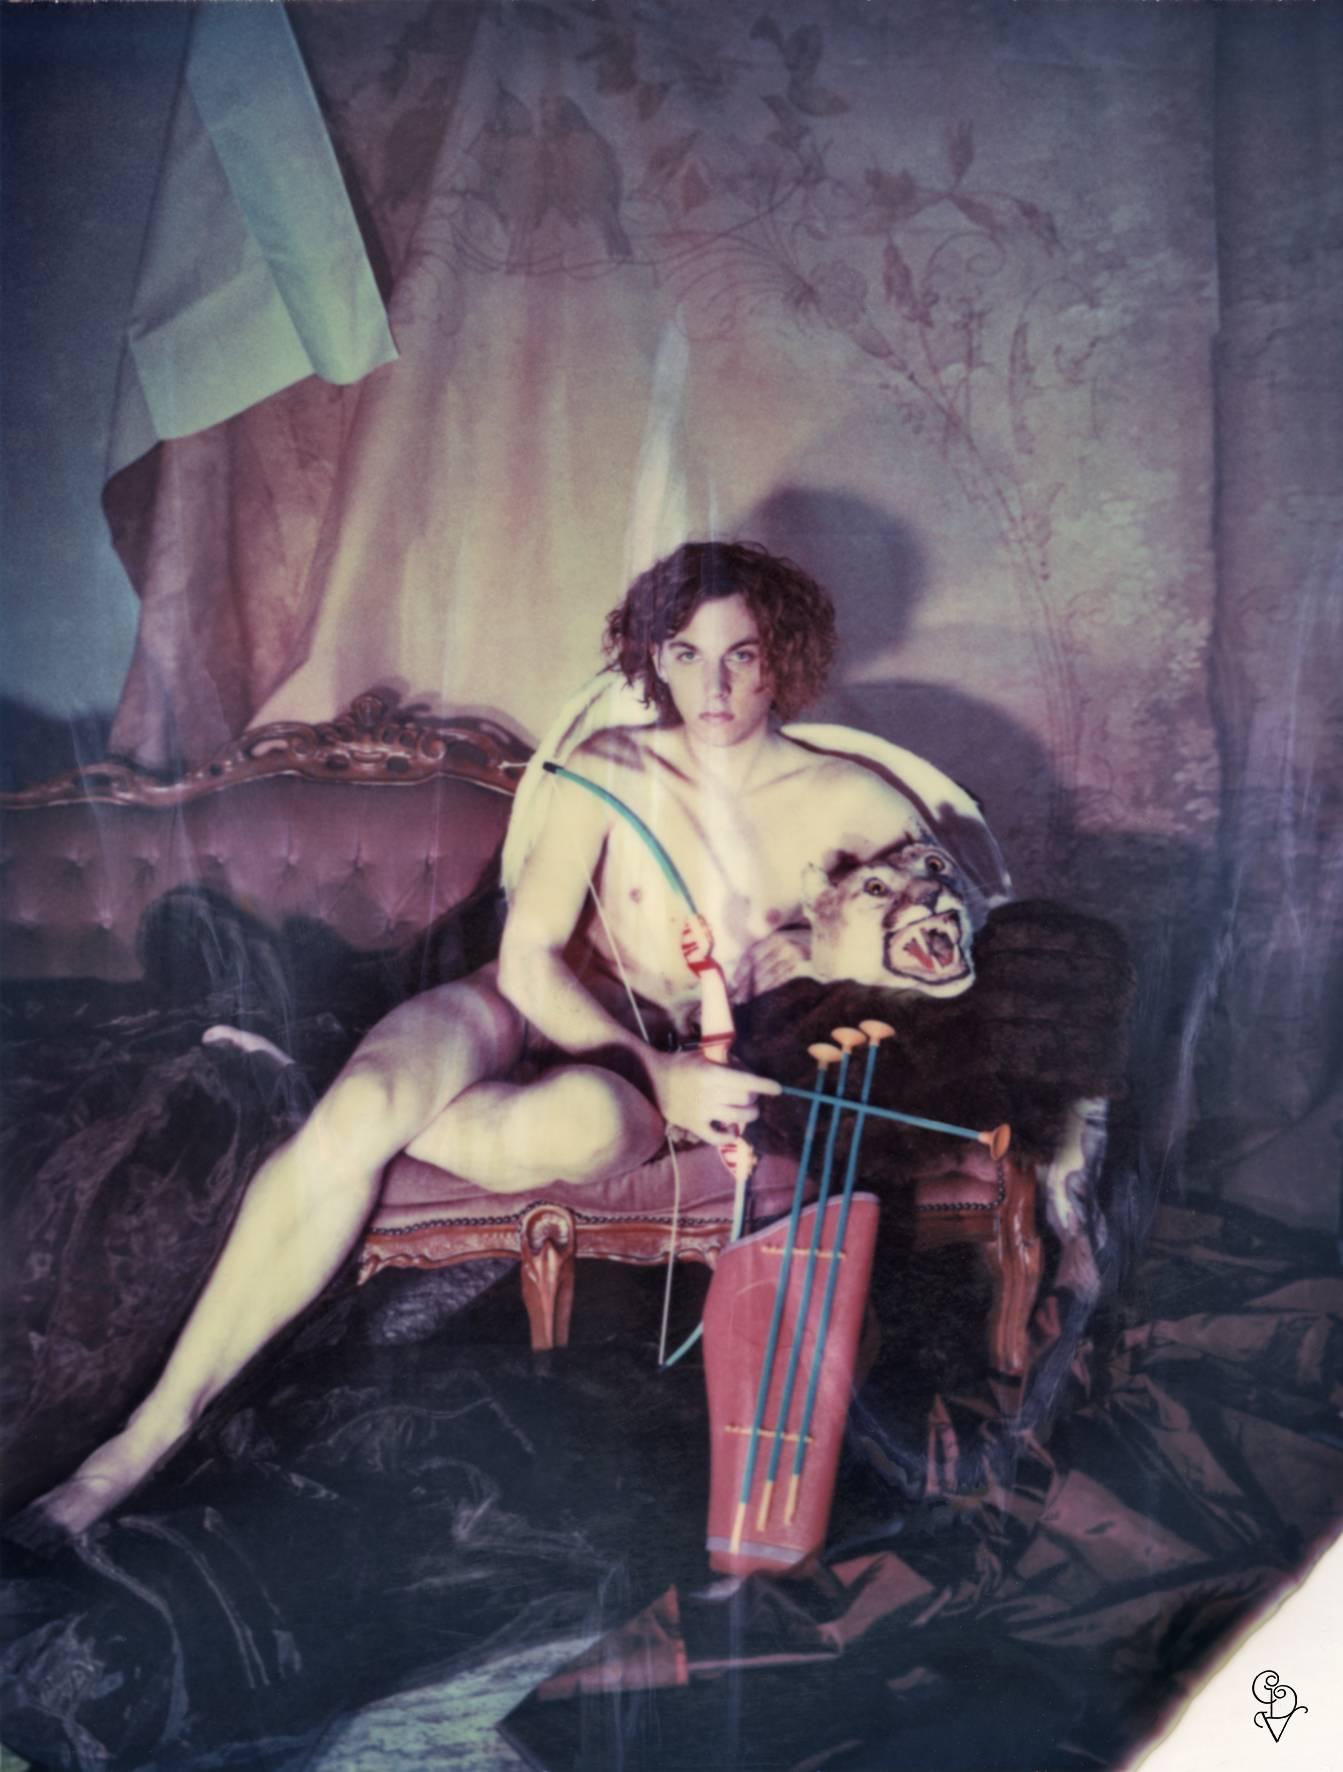 Carmen de Vos Nude Photograph - The Hunter (Odd Stories)